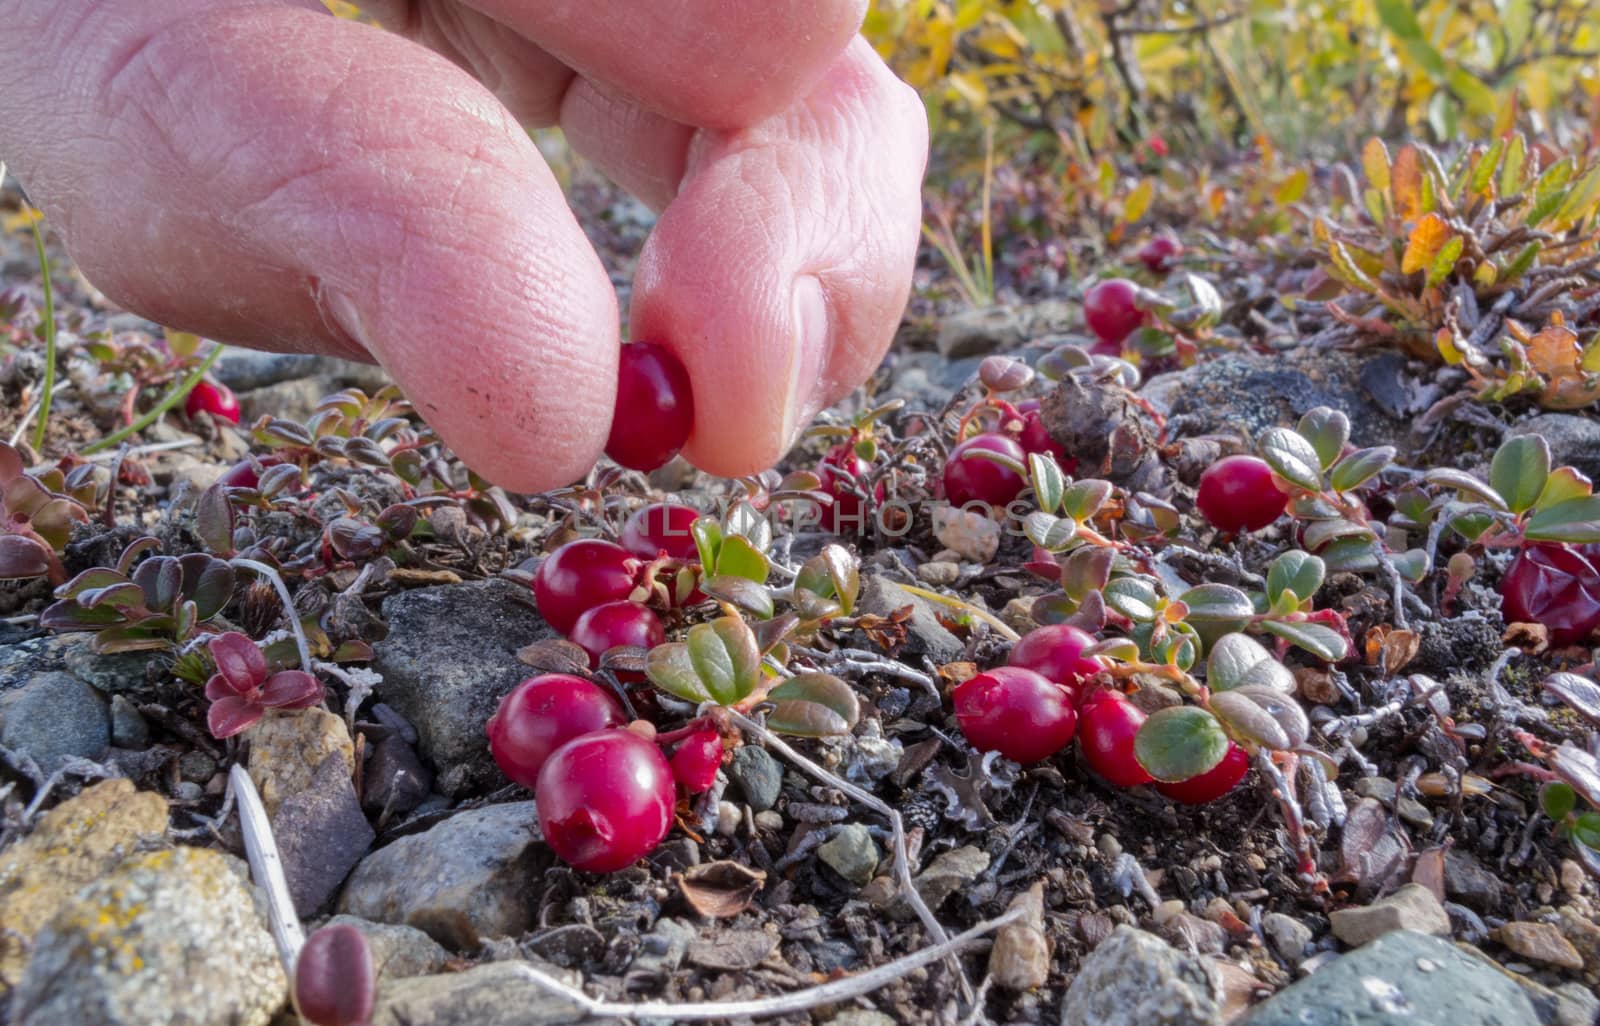 Cranberry Vaccinium vitis-idaea pick alpine tundra by PiLens